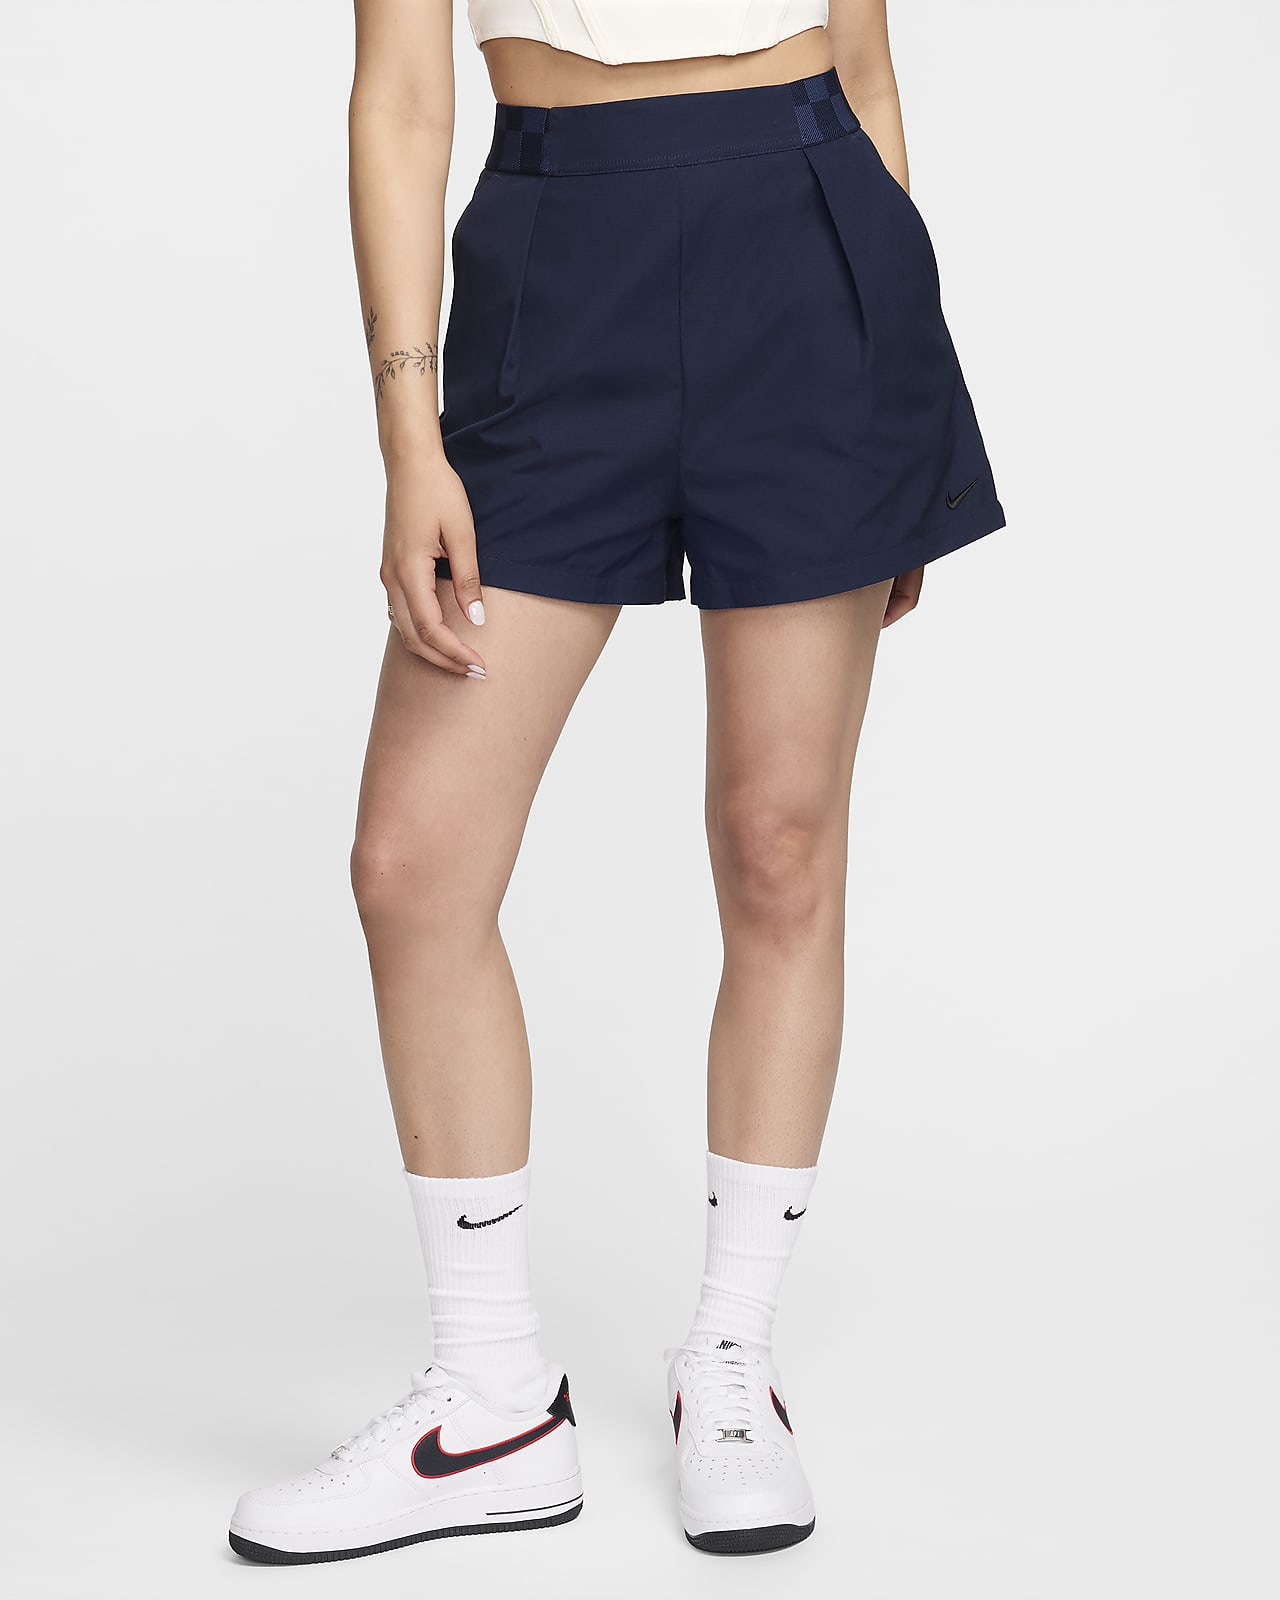 Nike Sportswear Collection Pantalons curts de cintura alta de 8 cm - Dona